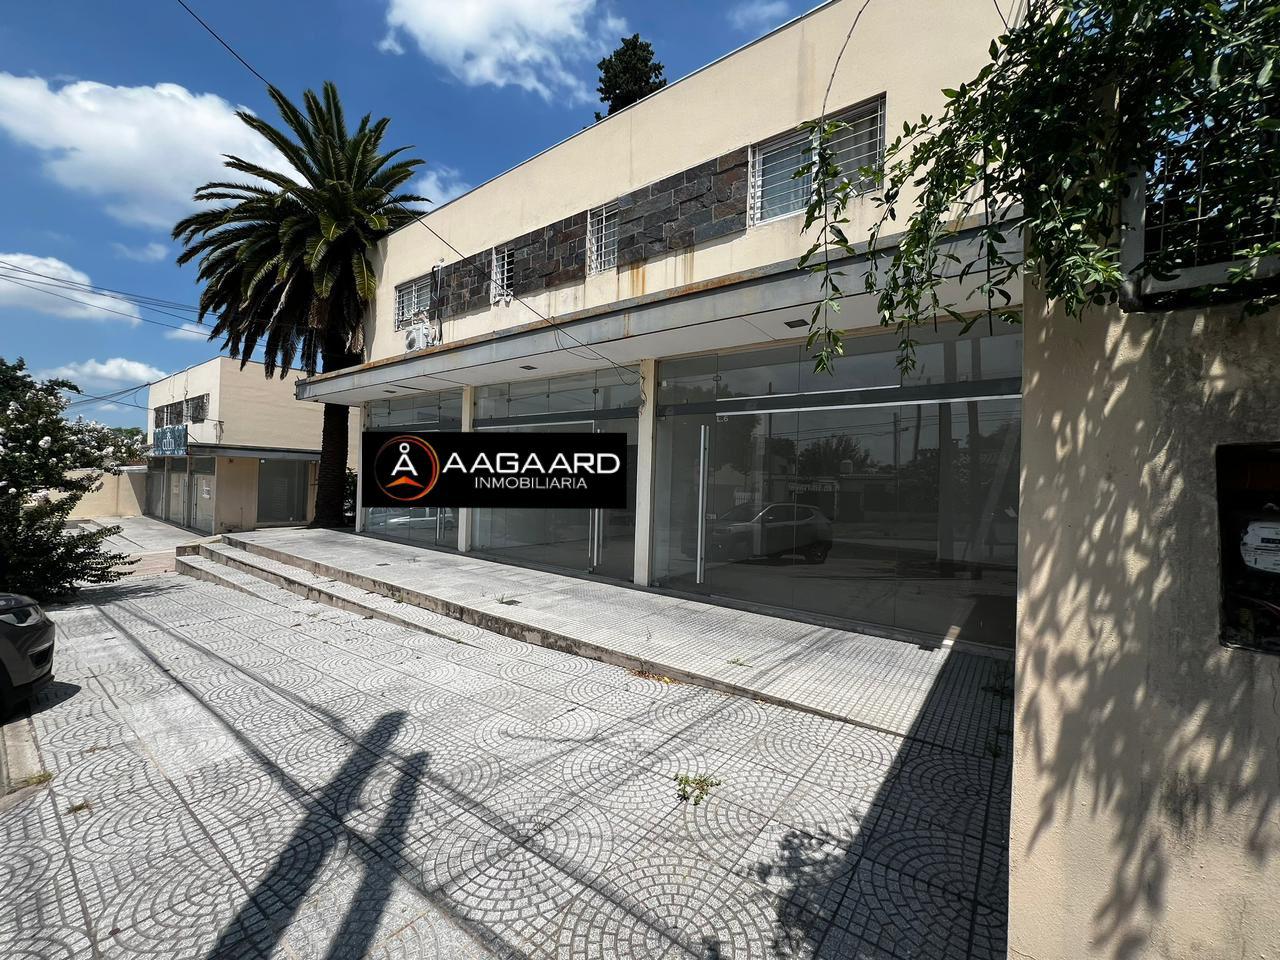 #4869728 | Alquiler | Local | Terrazas de Villa Allende (AAGAARD INMOBILIARIA)